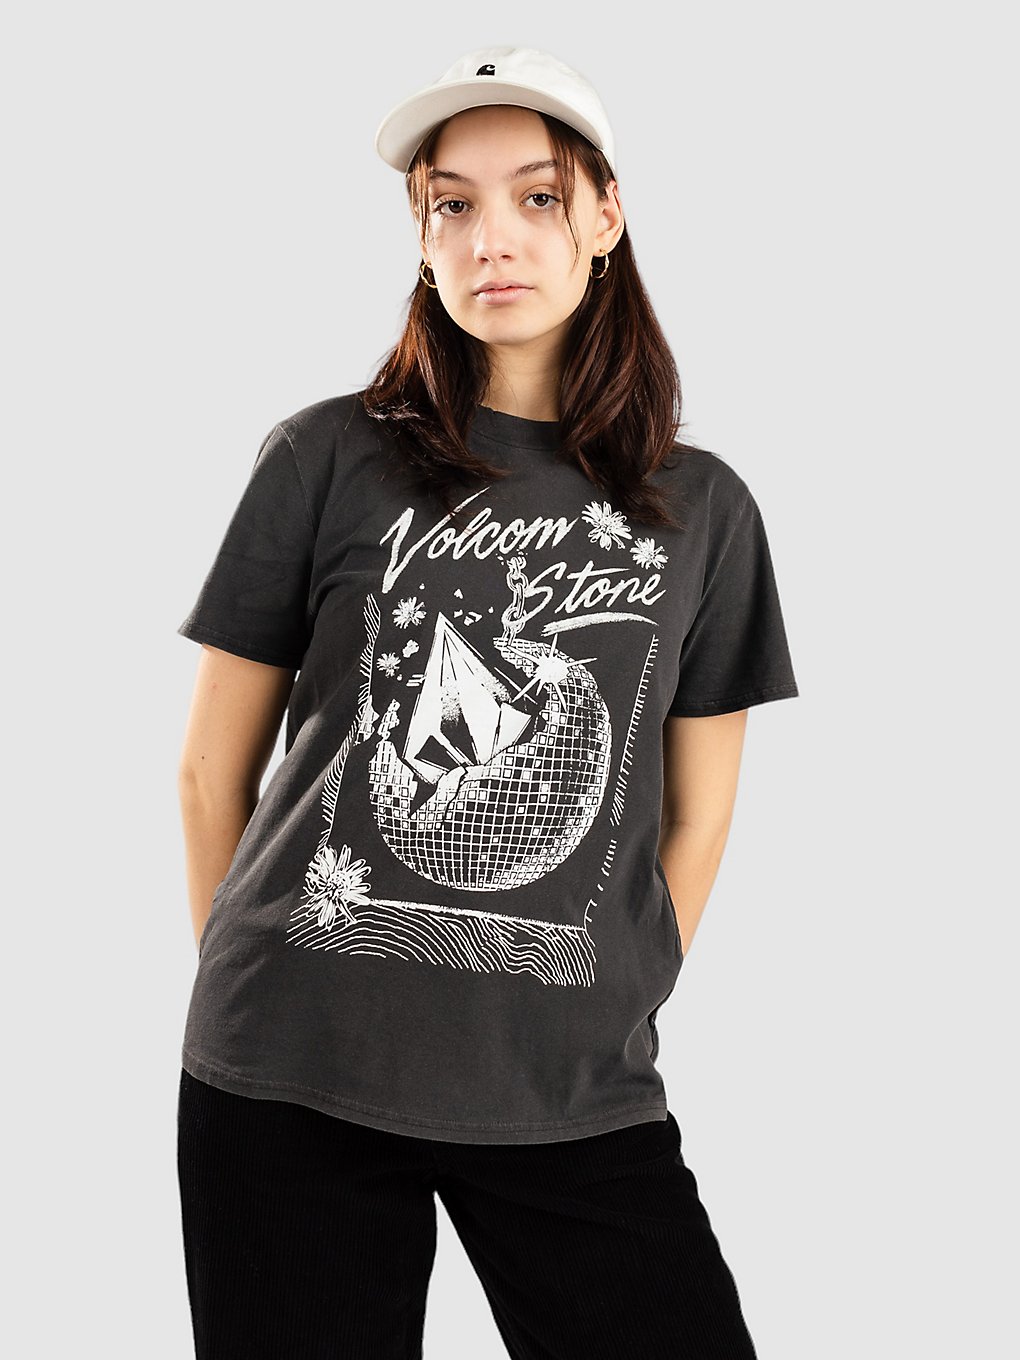 Volcom Lock It Up T-Shirt vintage black kaufen